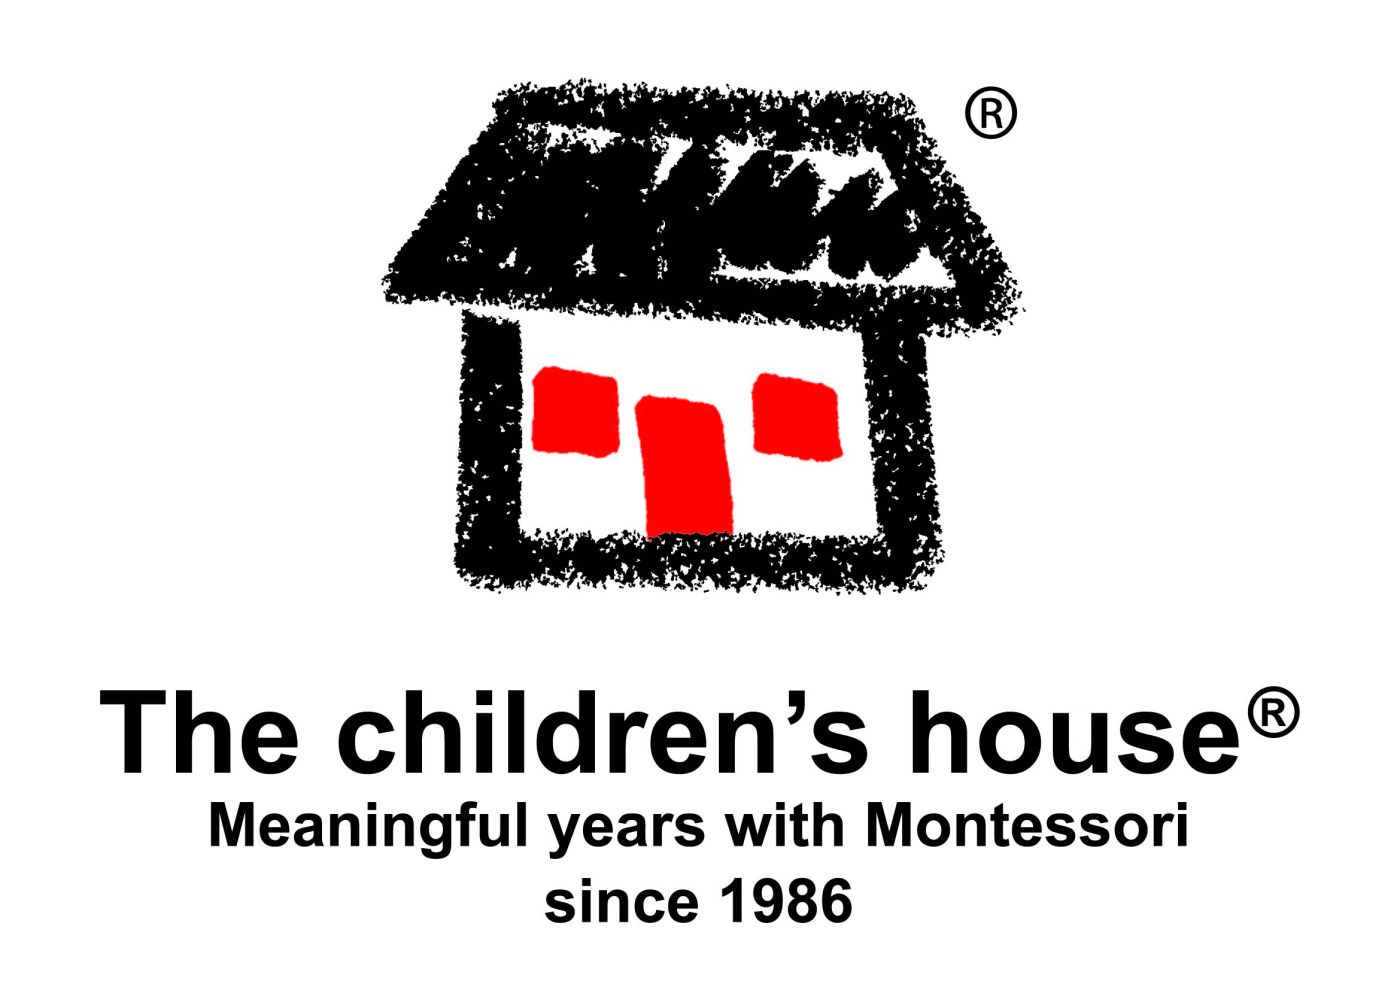 The children’s house